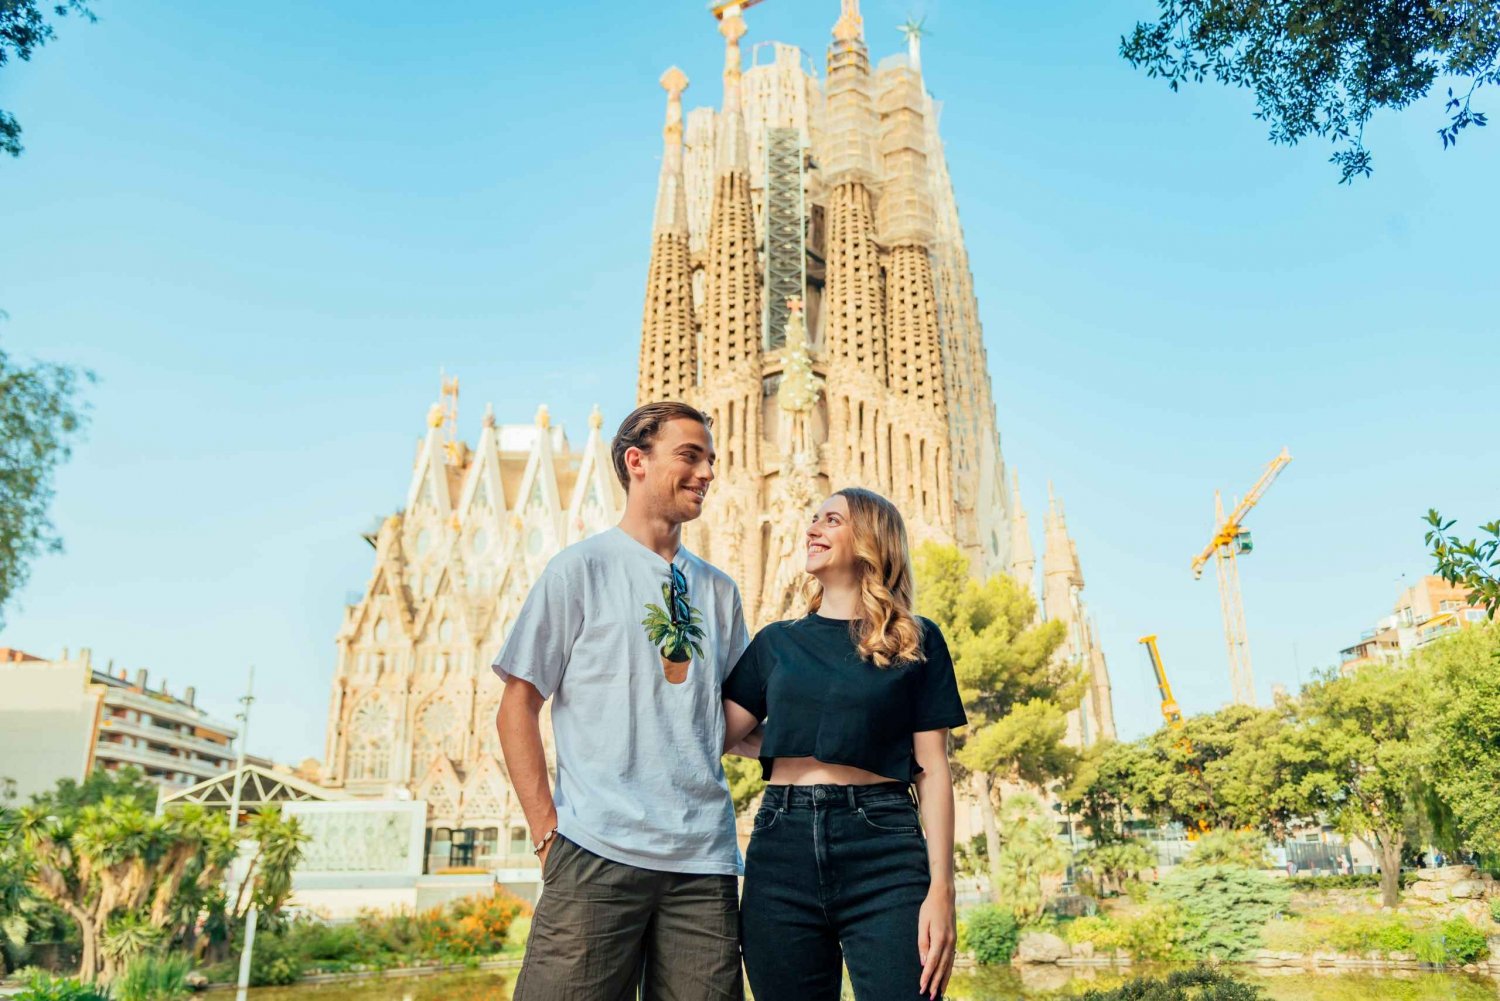 Barcelona: Your Own Private Photoshoot at Sagrada Familia